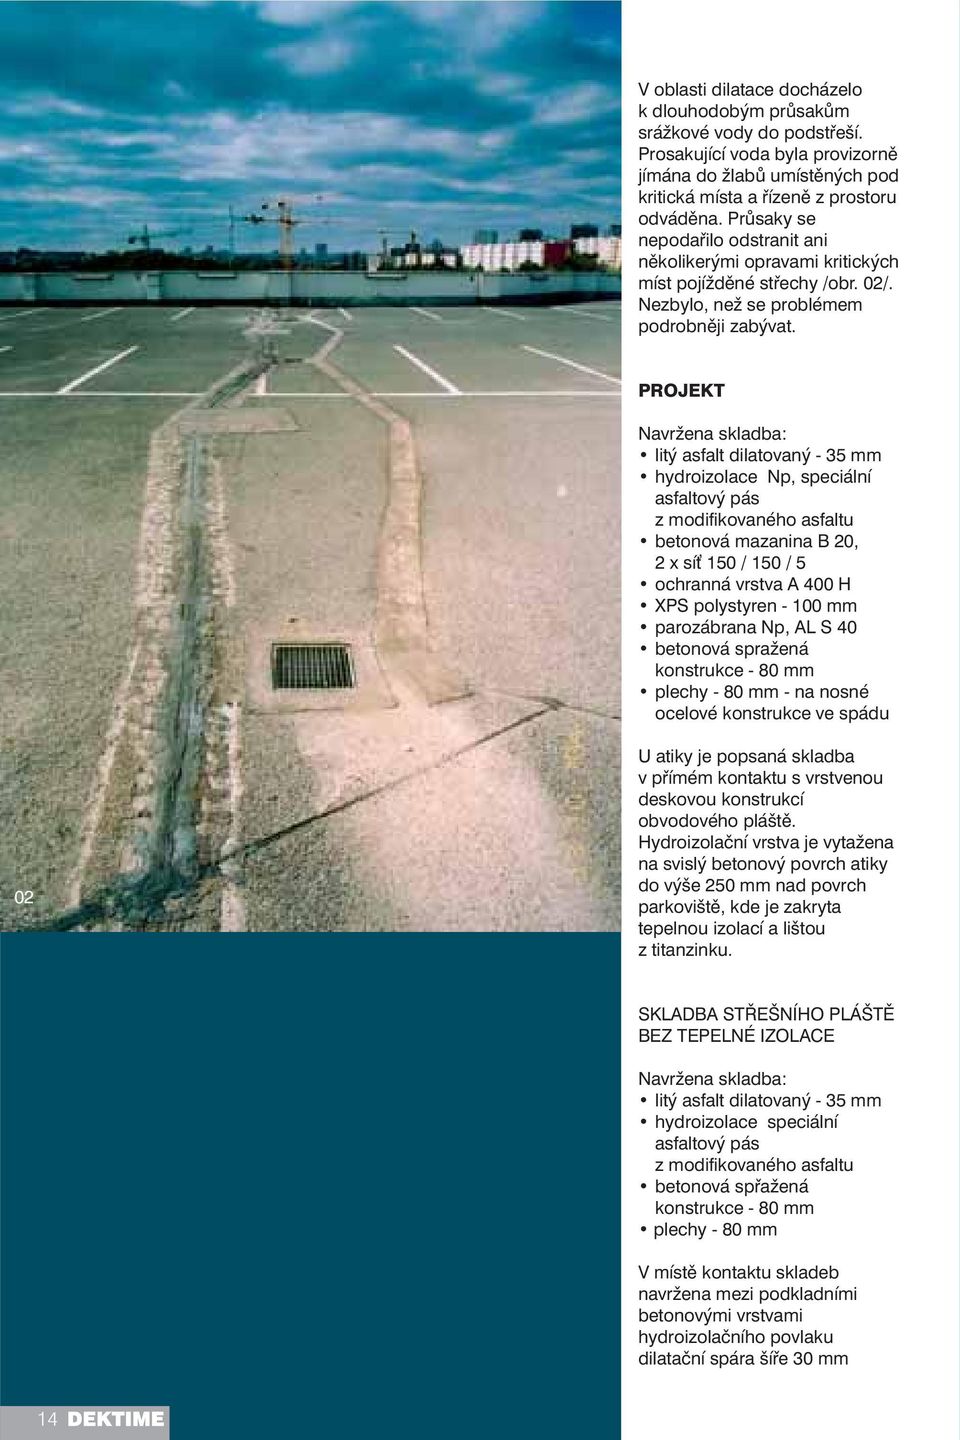 PROJEKT Navržena skladba: litý asfalt dilatovaný - 35 mm hydroizolace Np, speciální asfaltový pás z modifikovaného asfaltu betonová mazanina B 20, 2 x síť 150 / 150 / 5 ochranná vrstva A 400 H XPS